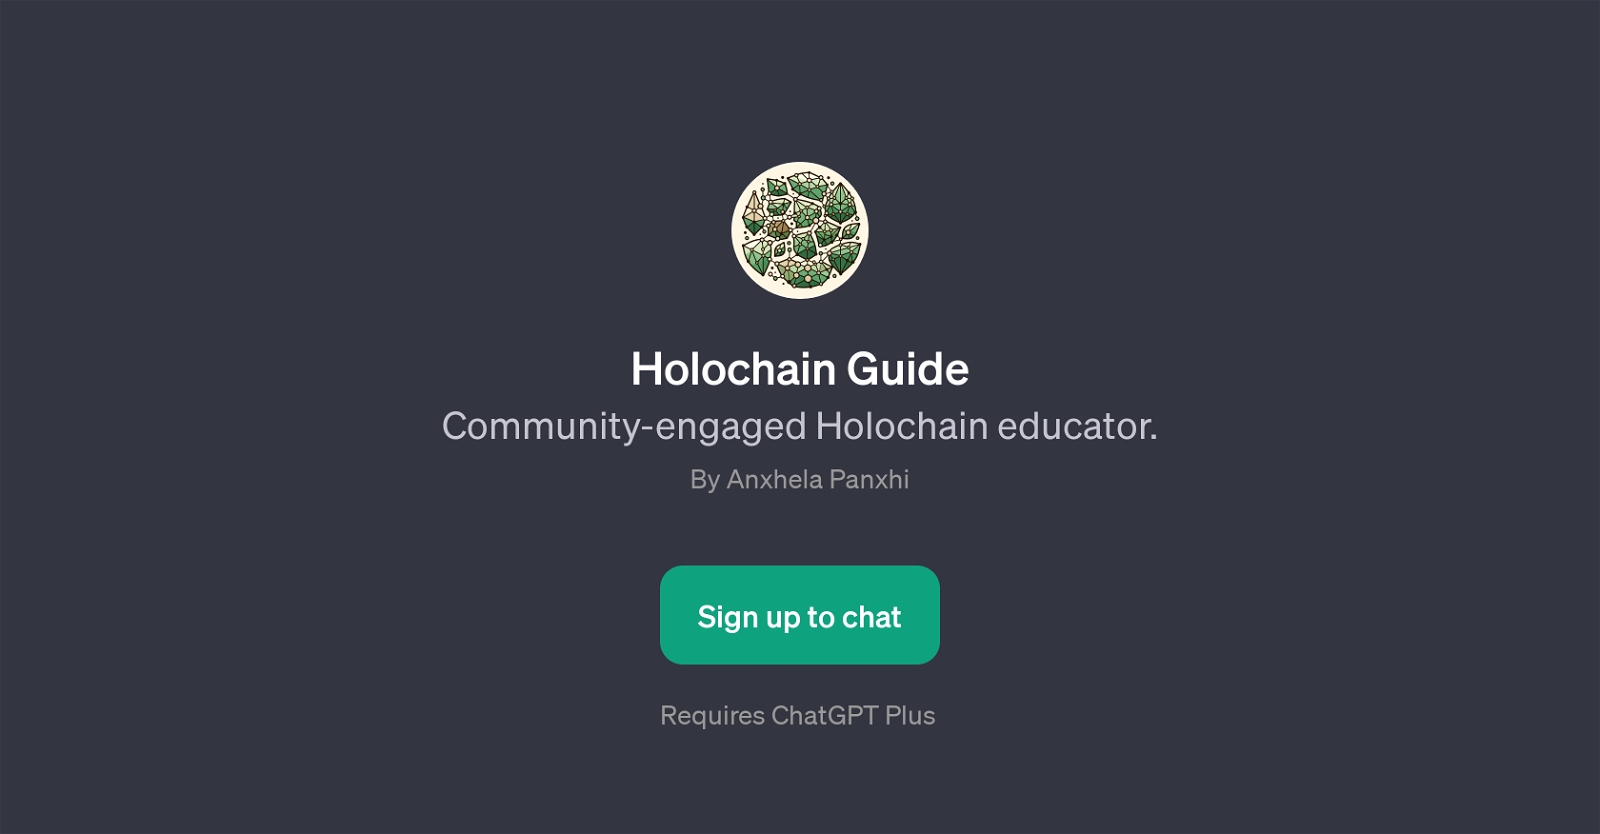 Holochain Guide website